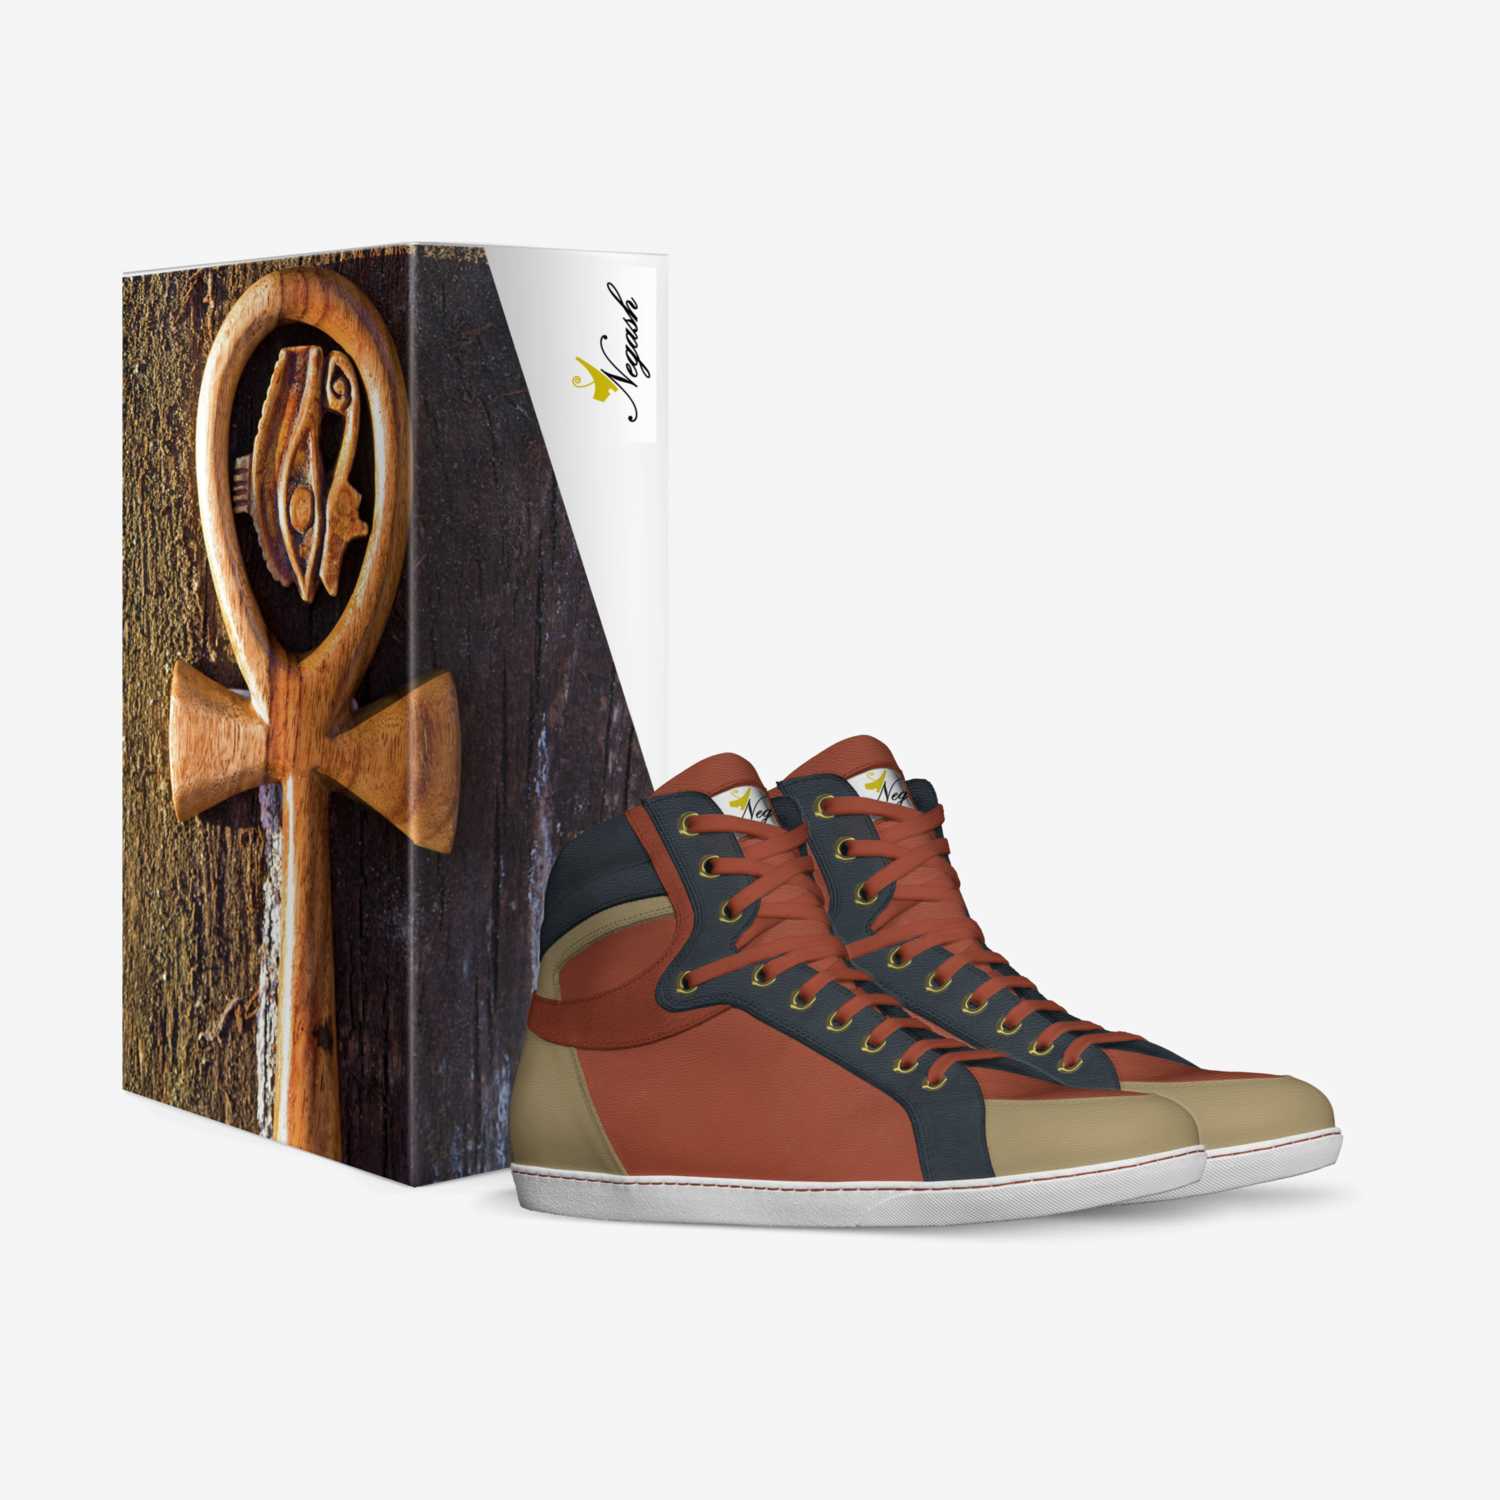 Negash Khnum custom made in Italy shoes by Rocklin Negash | Box view